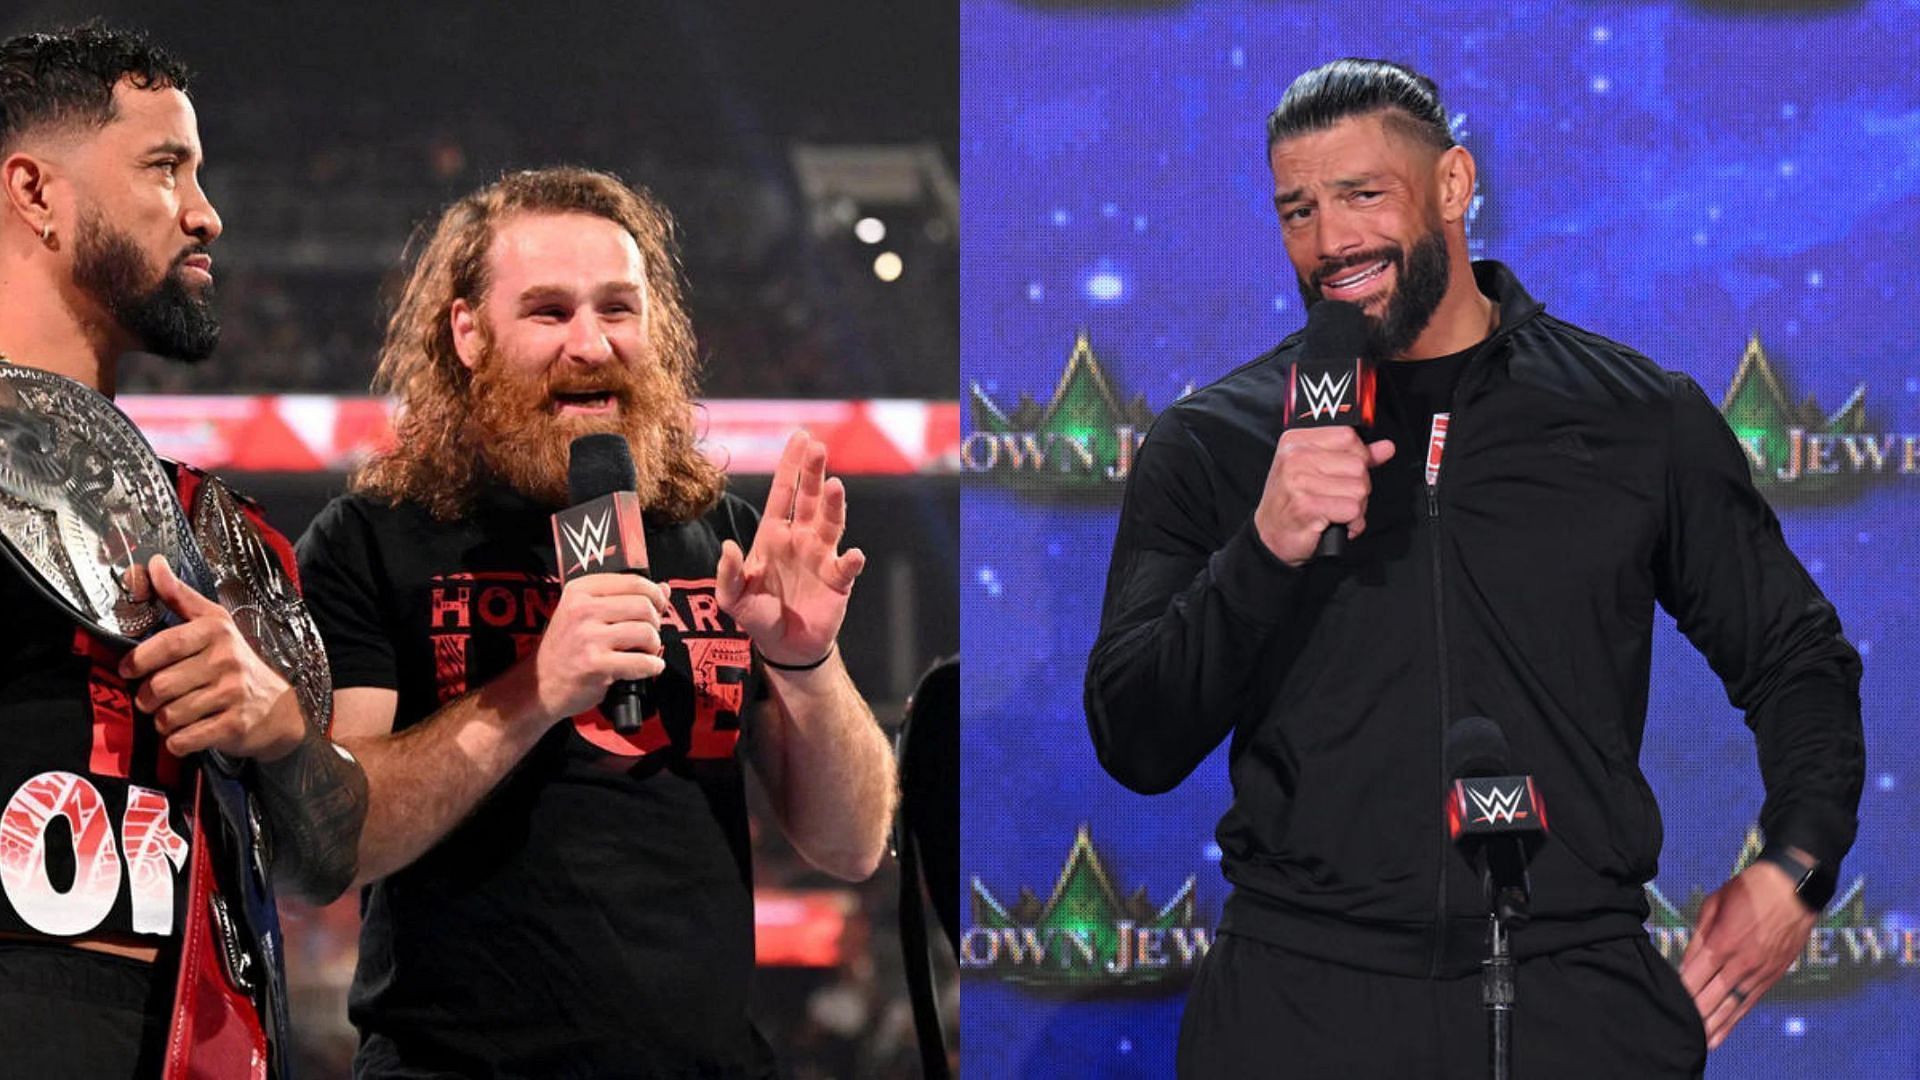 The WWE Universe in Saudi Arabia wanted an appearance from Sami Zayn